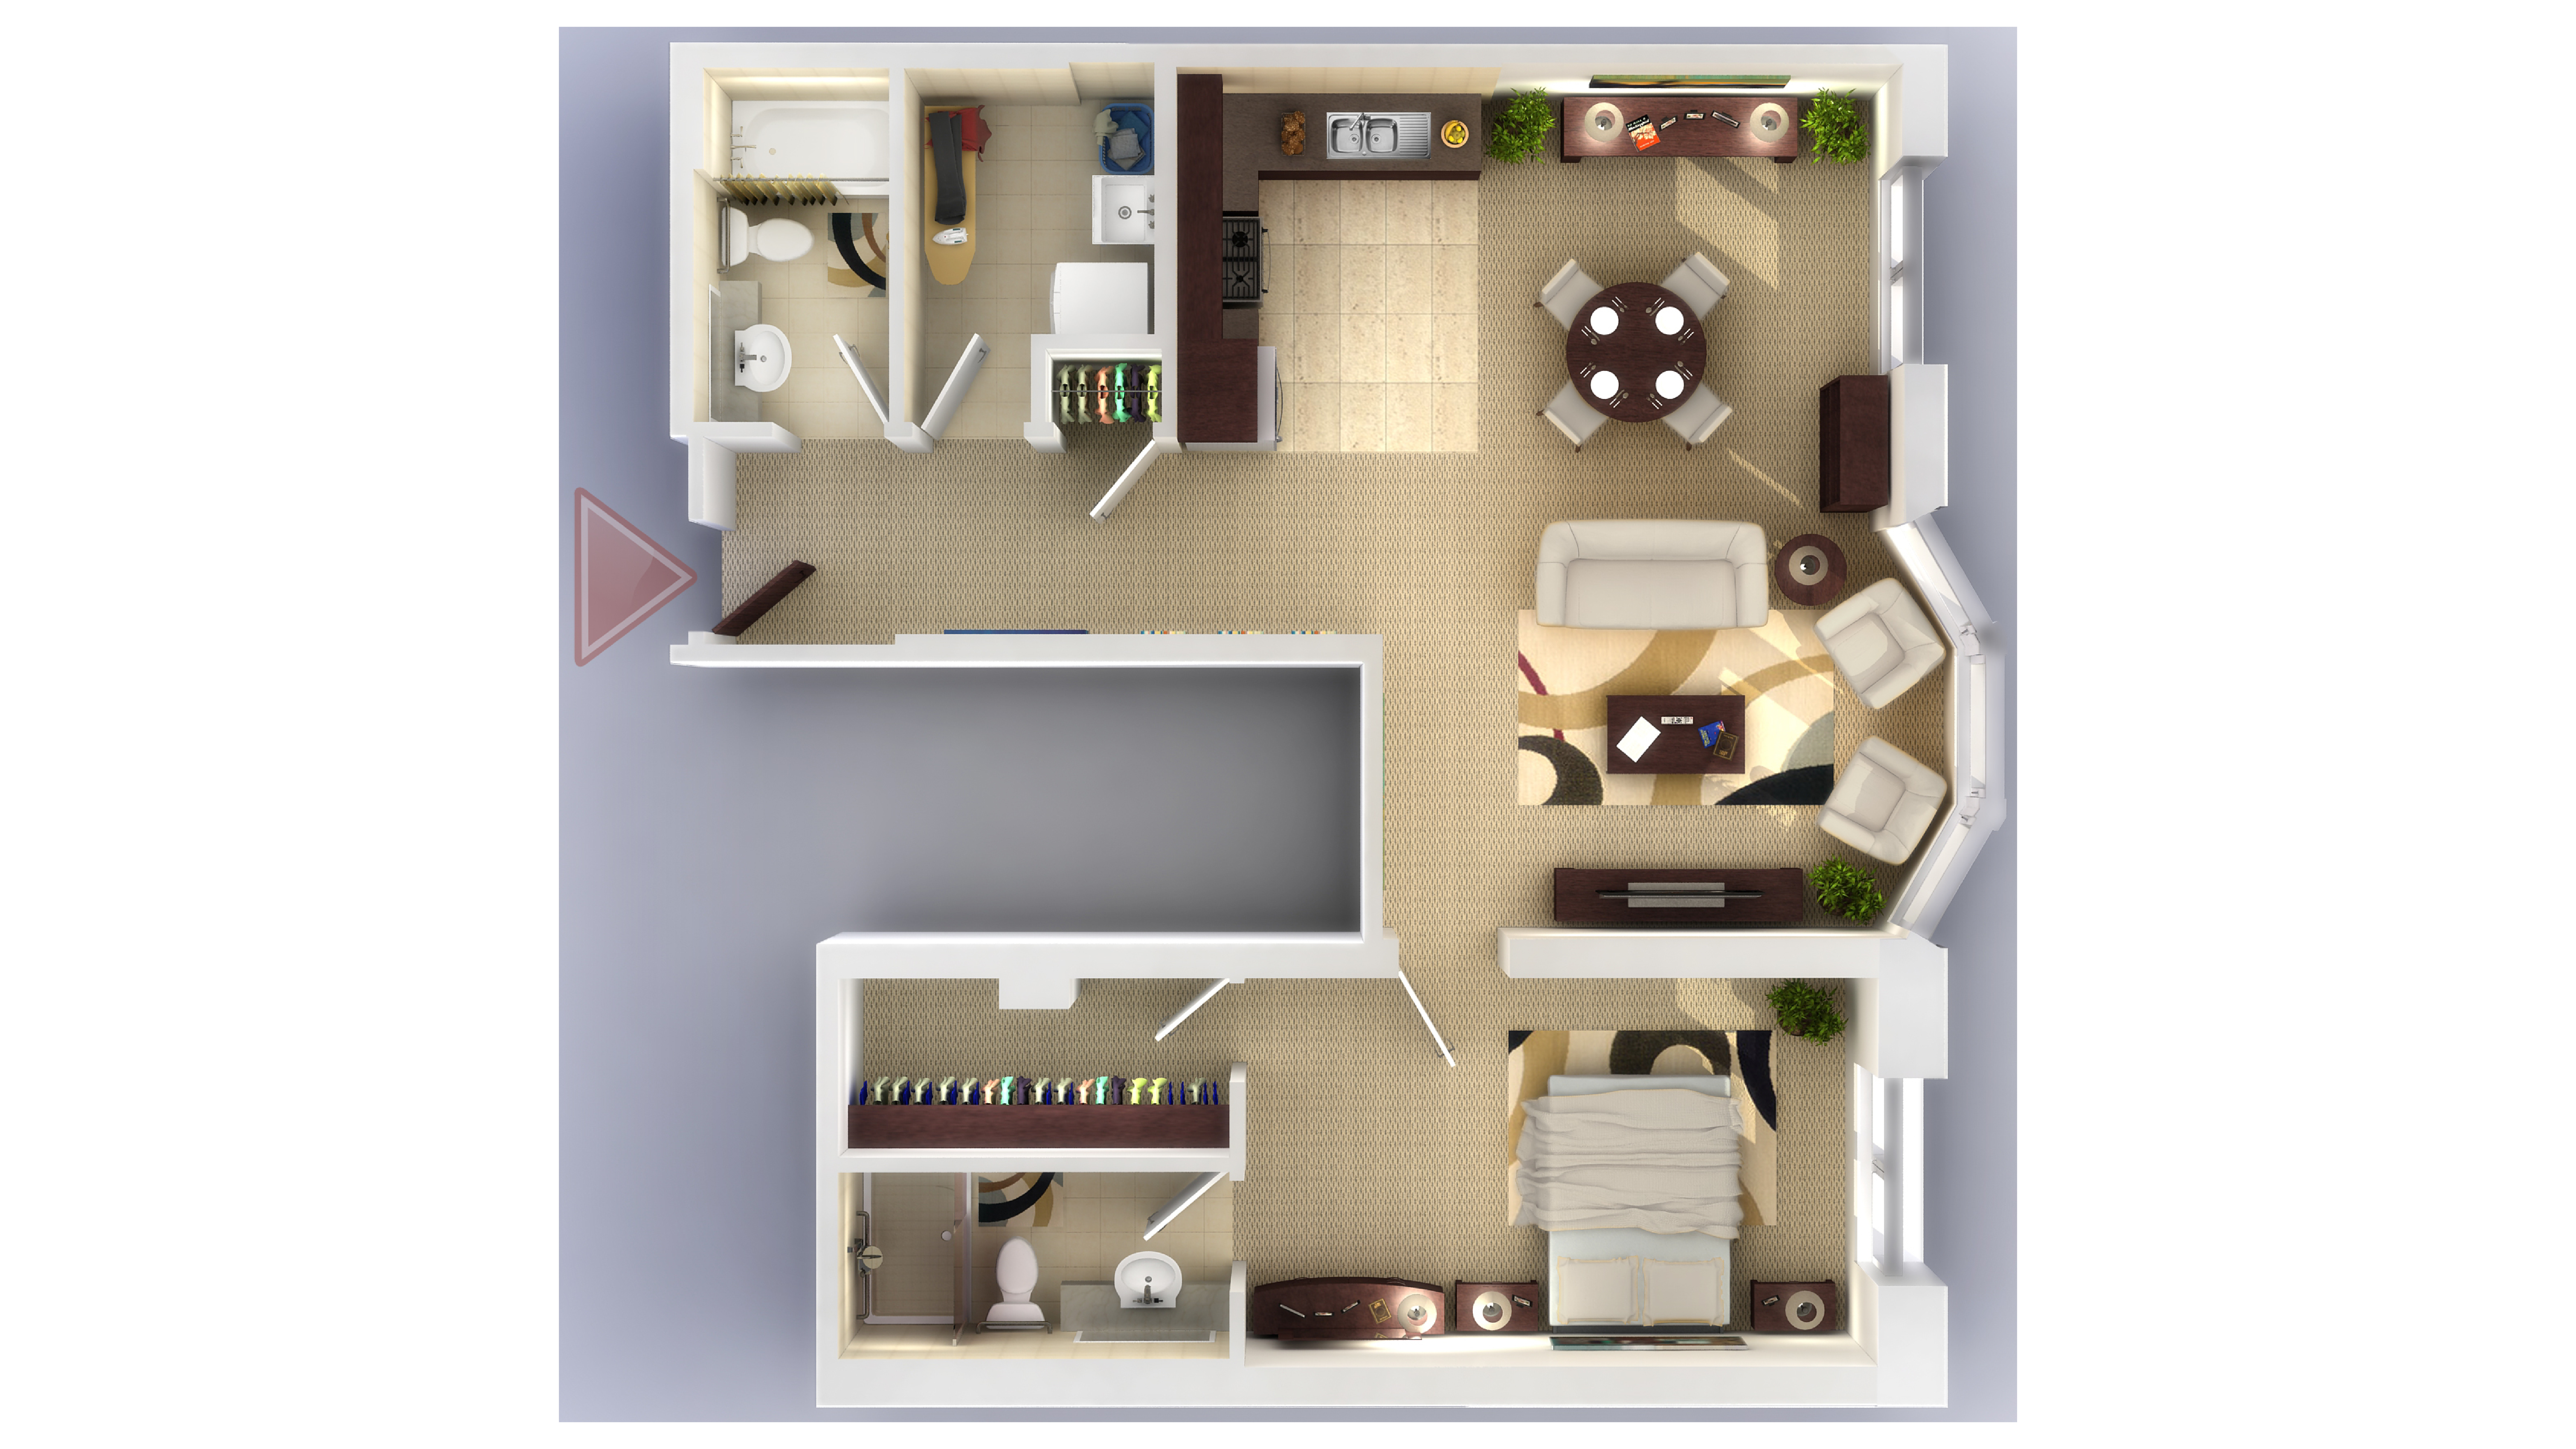 Ailsa Craig (Suite 3) One Bedroom